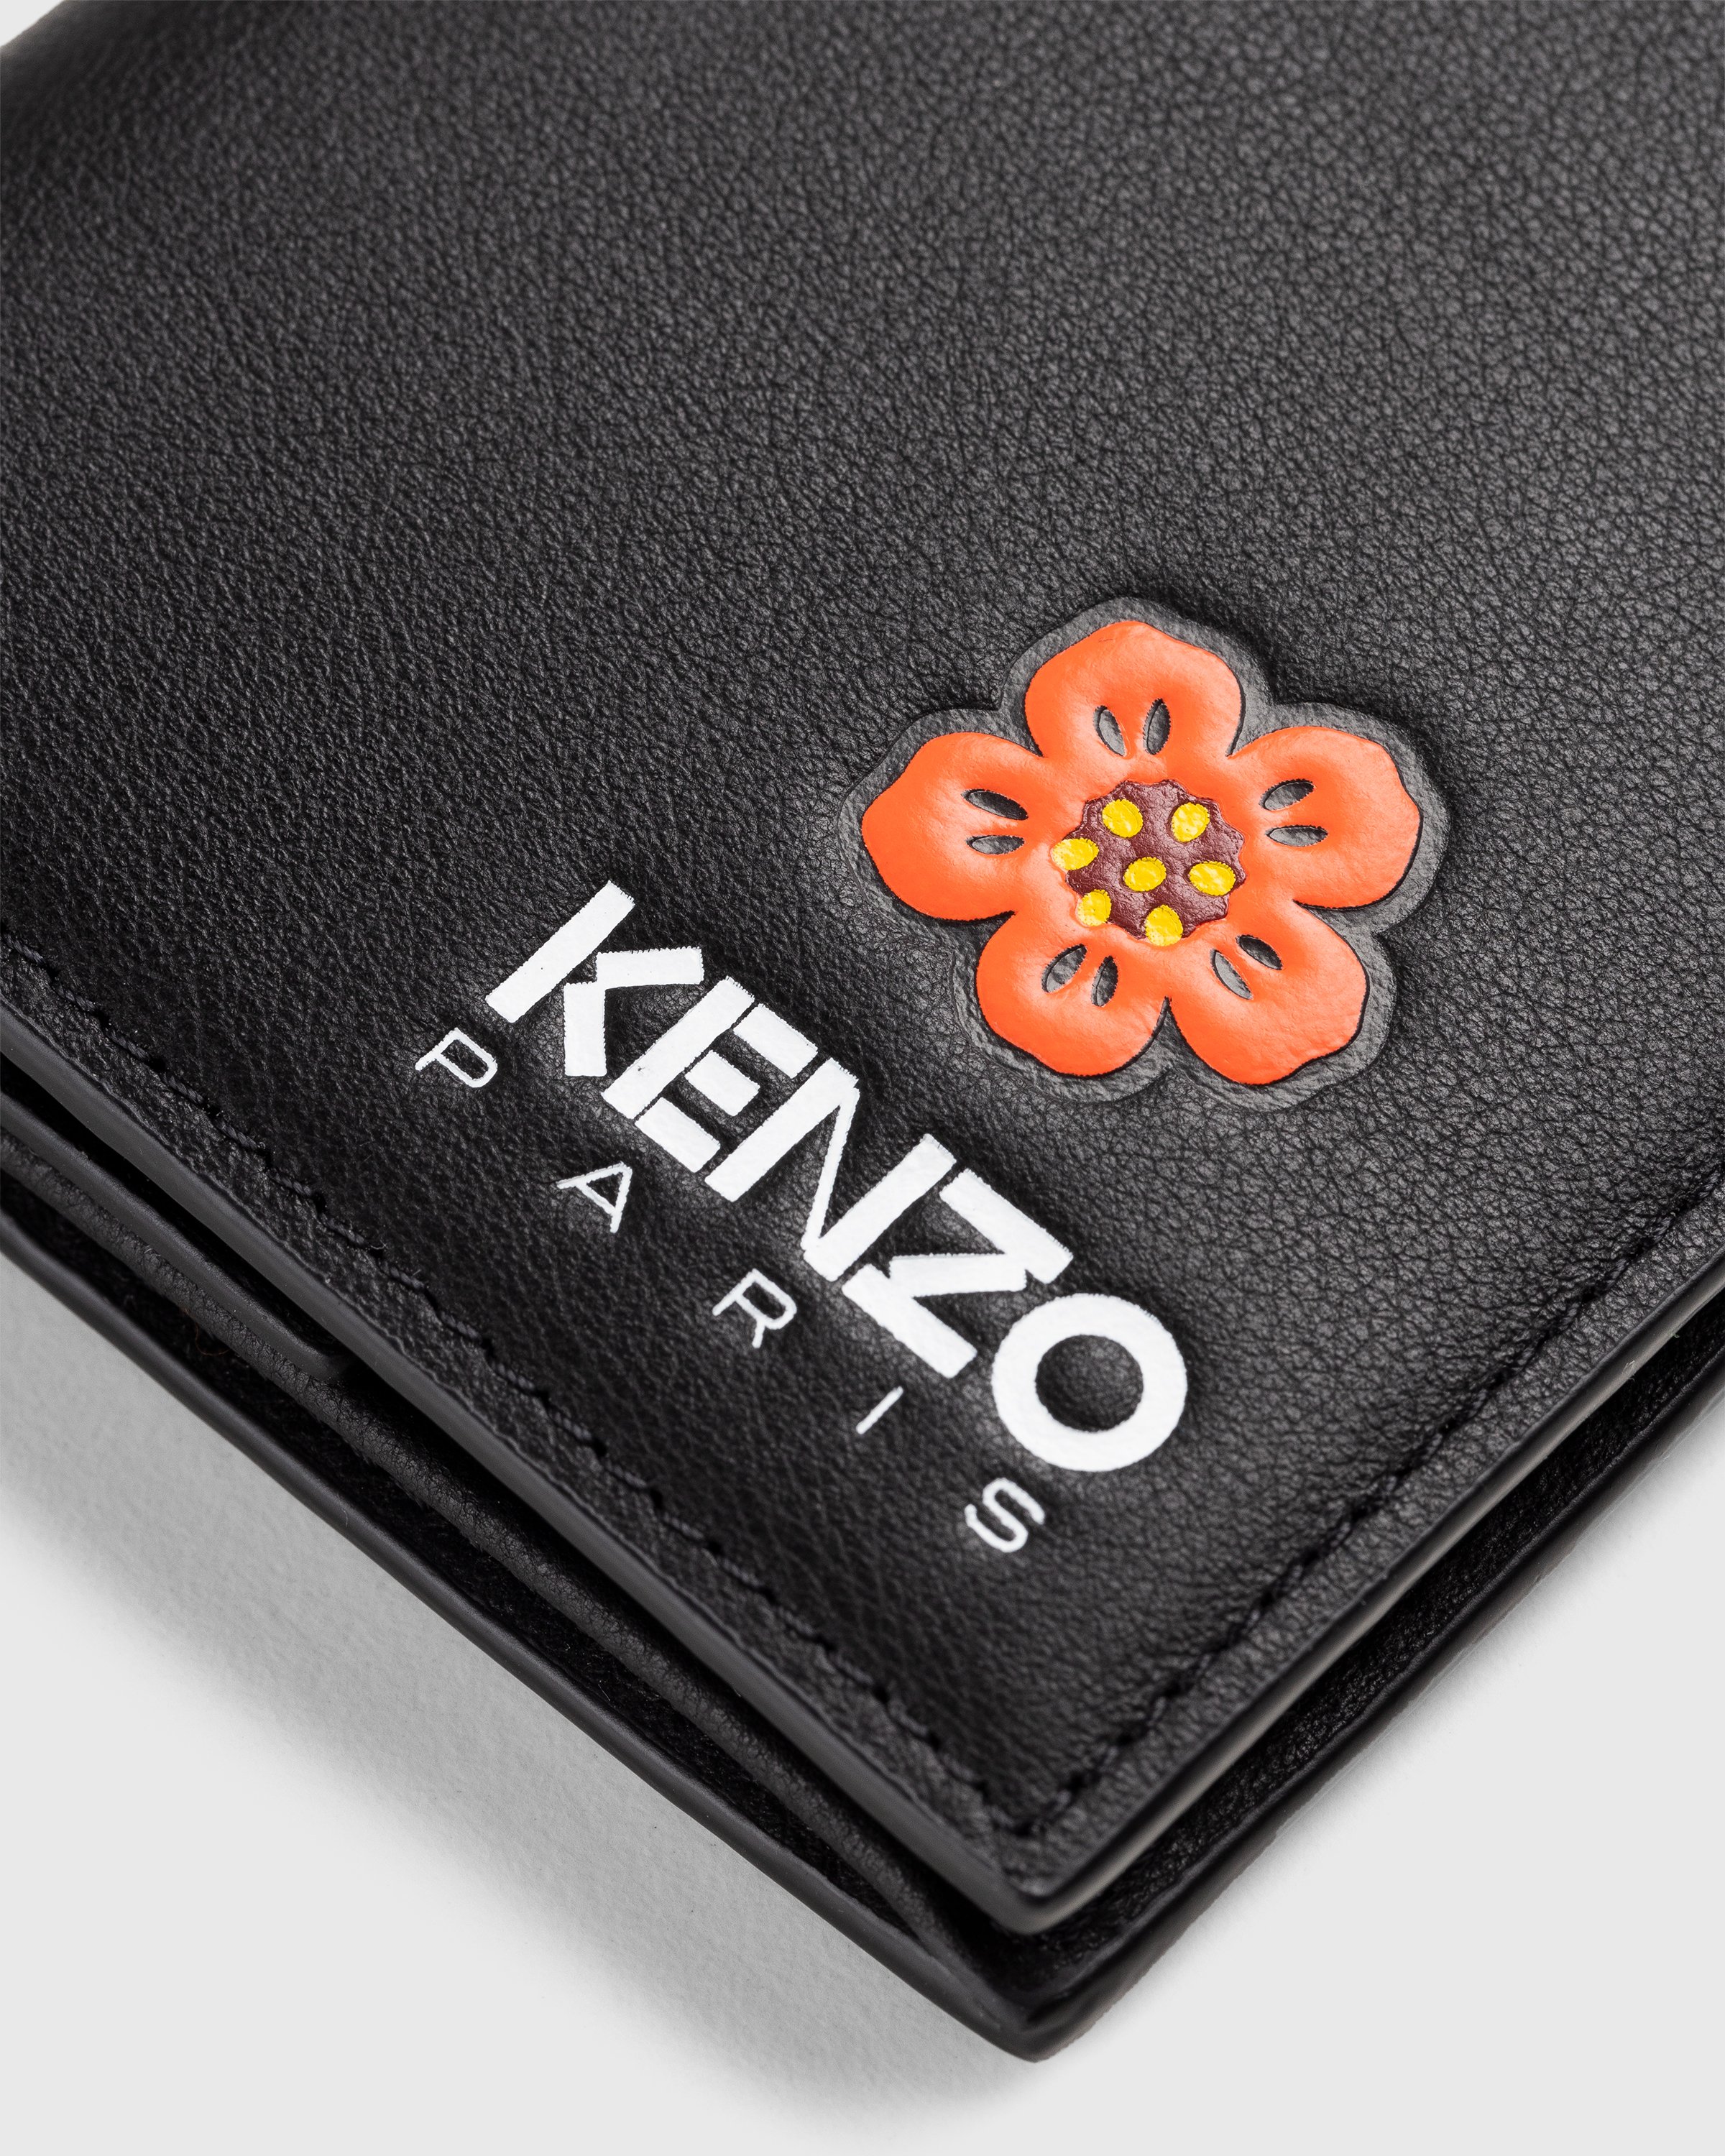 Kenzo - Crest Foldable Wallet Black - Accessories - Black - Image 5